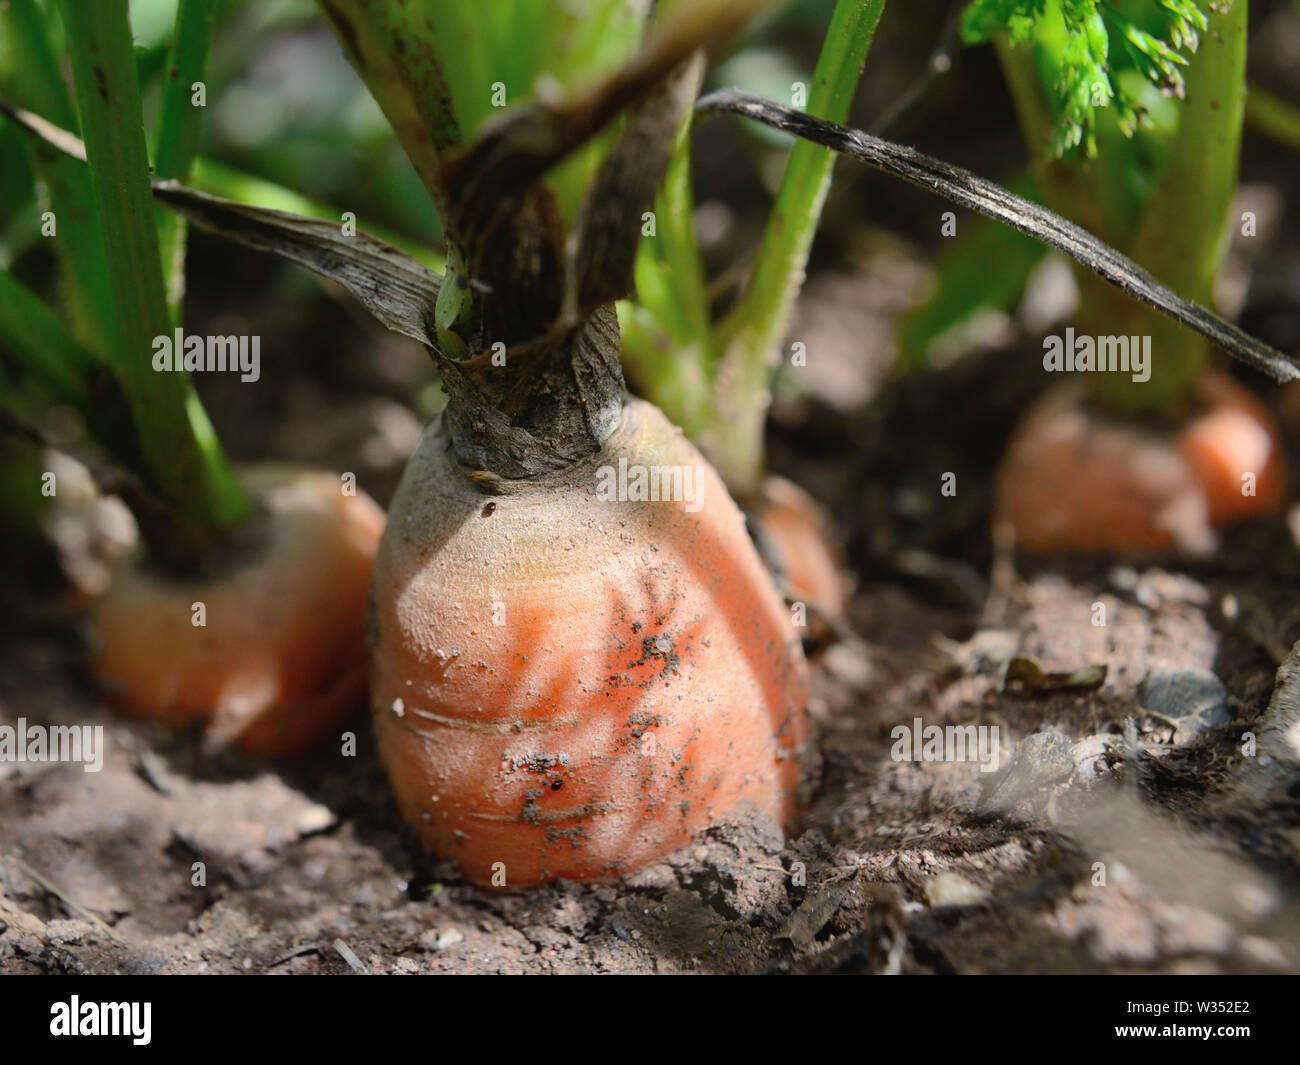 Carrot in the ground. Daucus carota subsp. sativus, close up Stock Photo